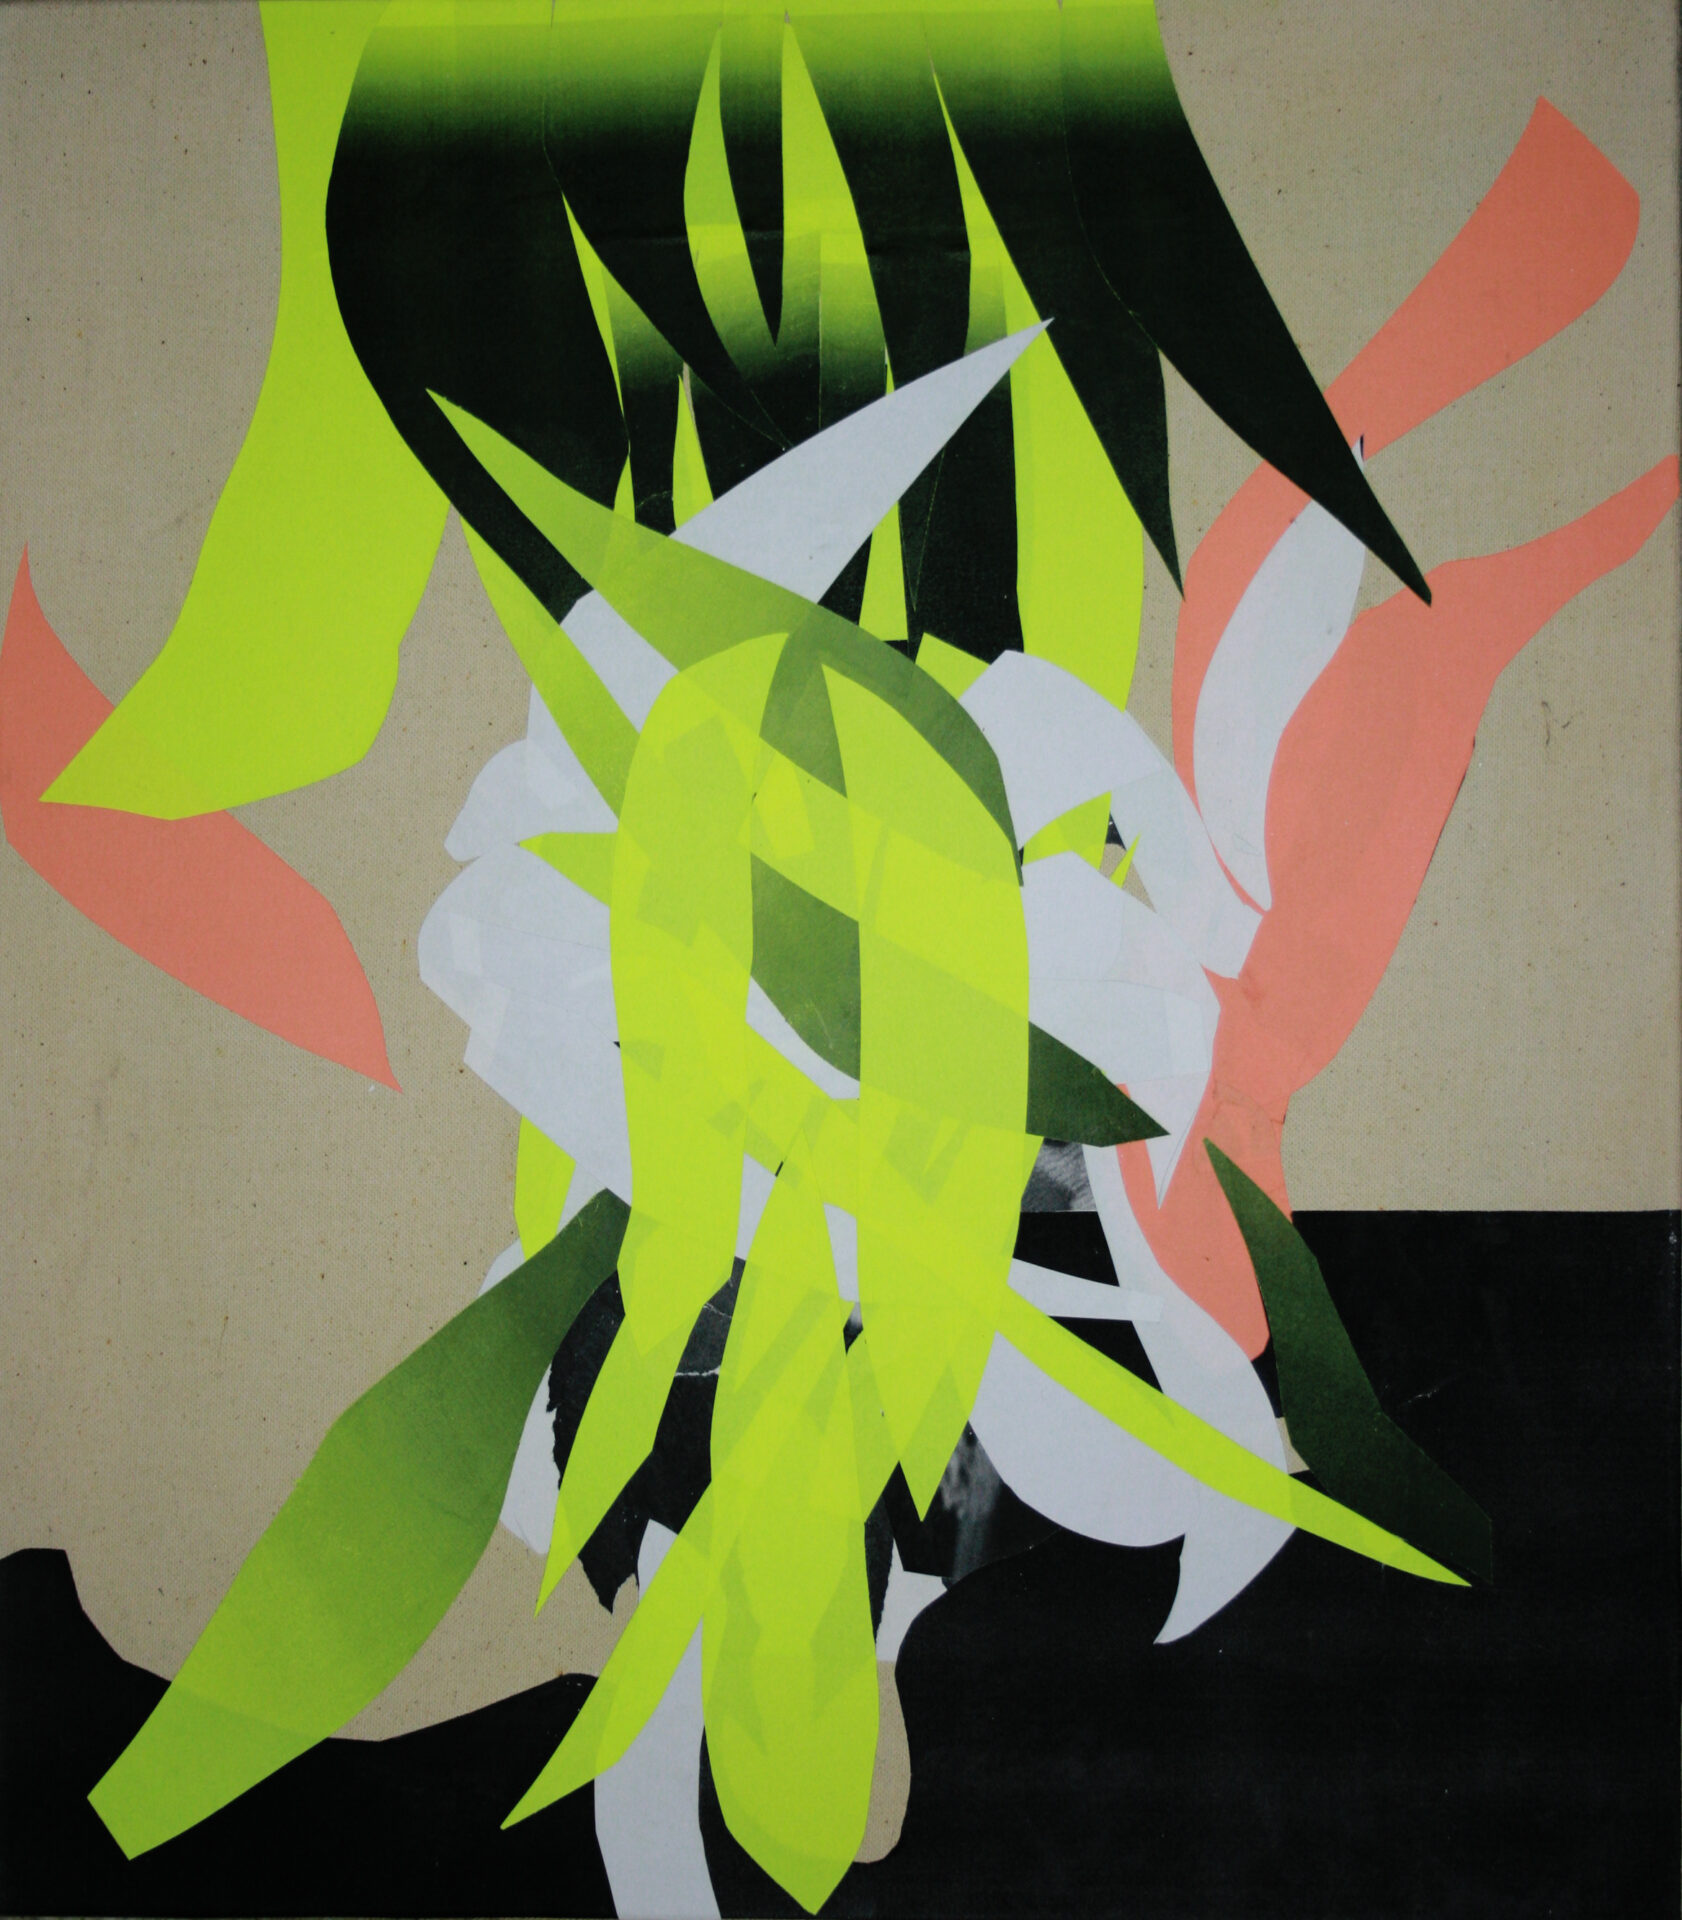 Daniel Beer, INFINITE ACTION on paper, 19-14, 50 x 55 cm, Papier auf Leinwand, 2019